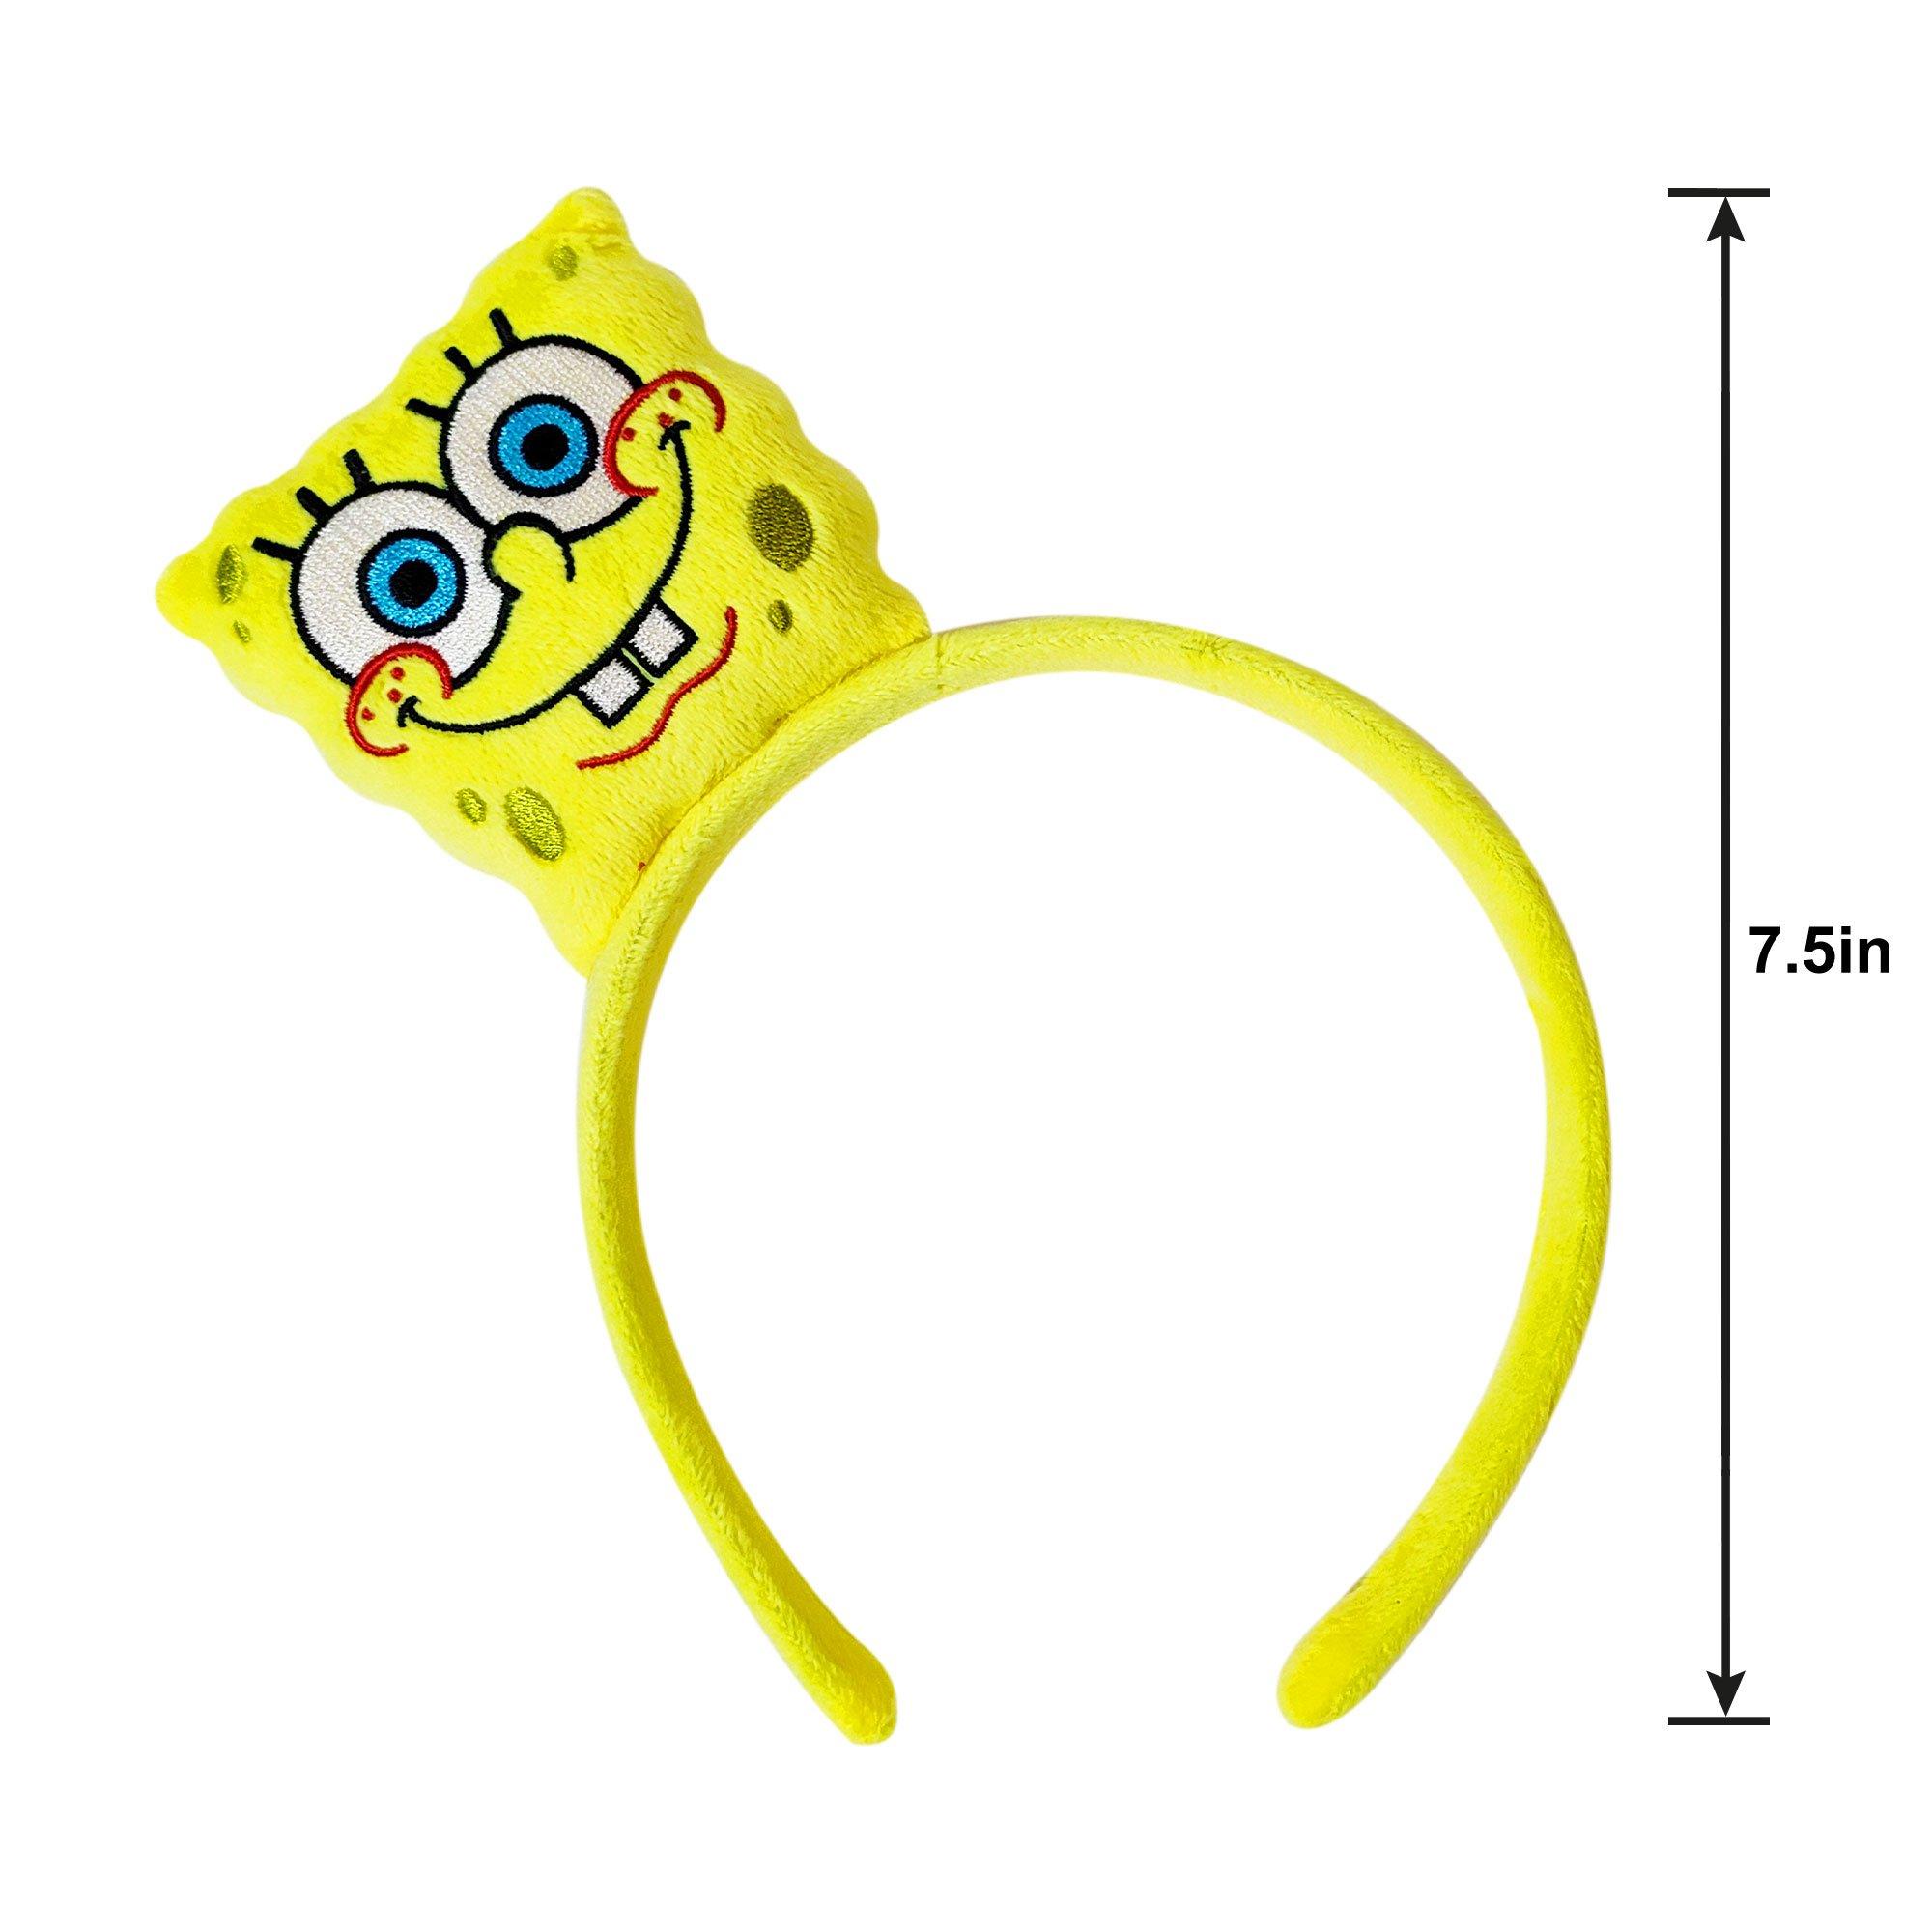 SpongeBob SquarePants Headband